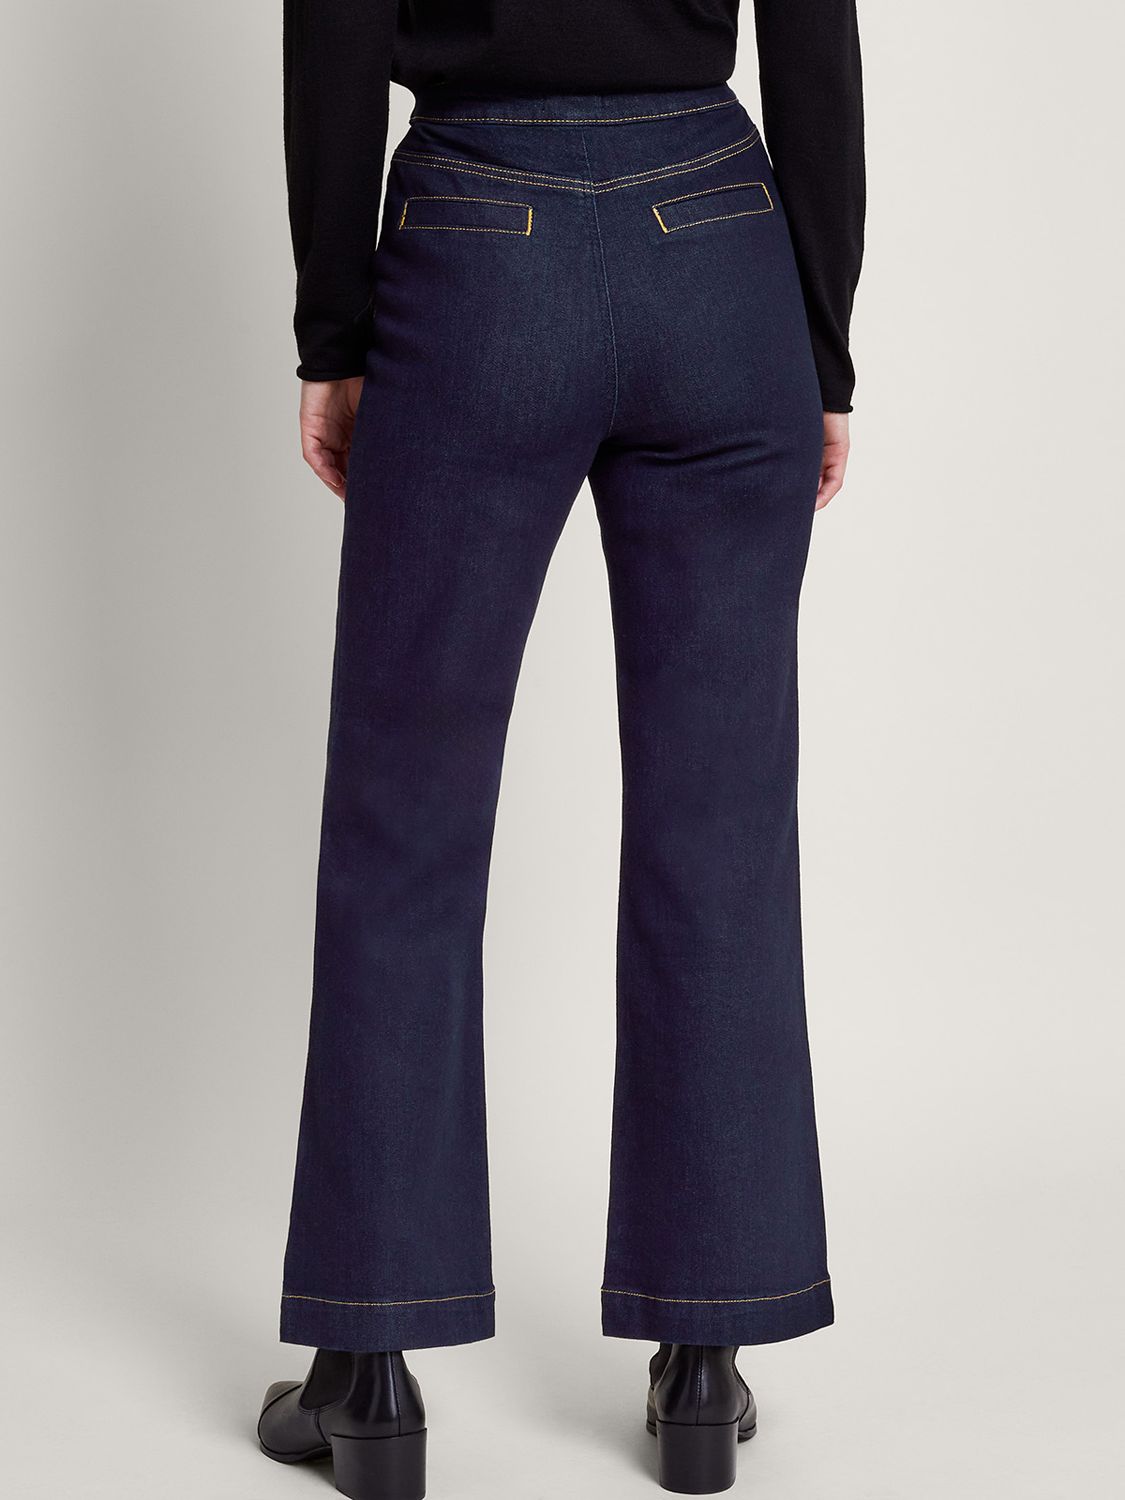 Buy Monsoon Rose Button Bootcut Jeans, Indigo Online at johnlewis.com